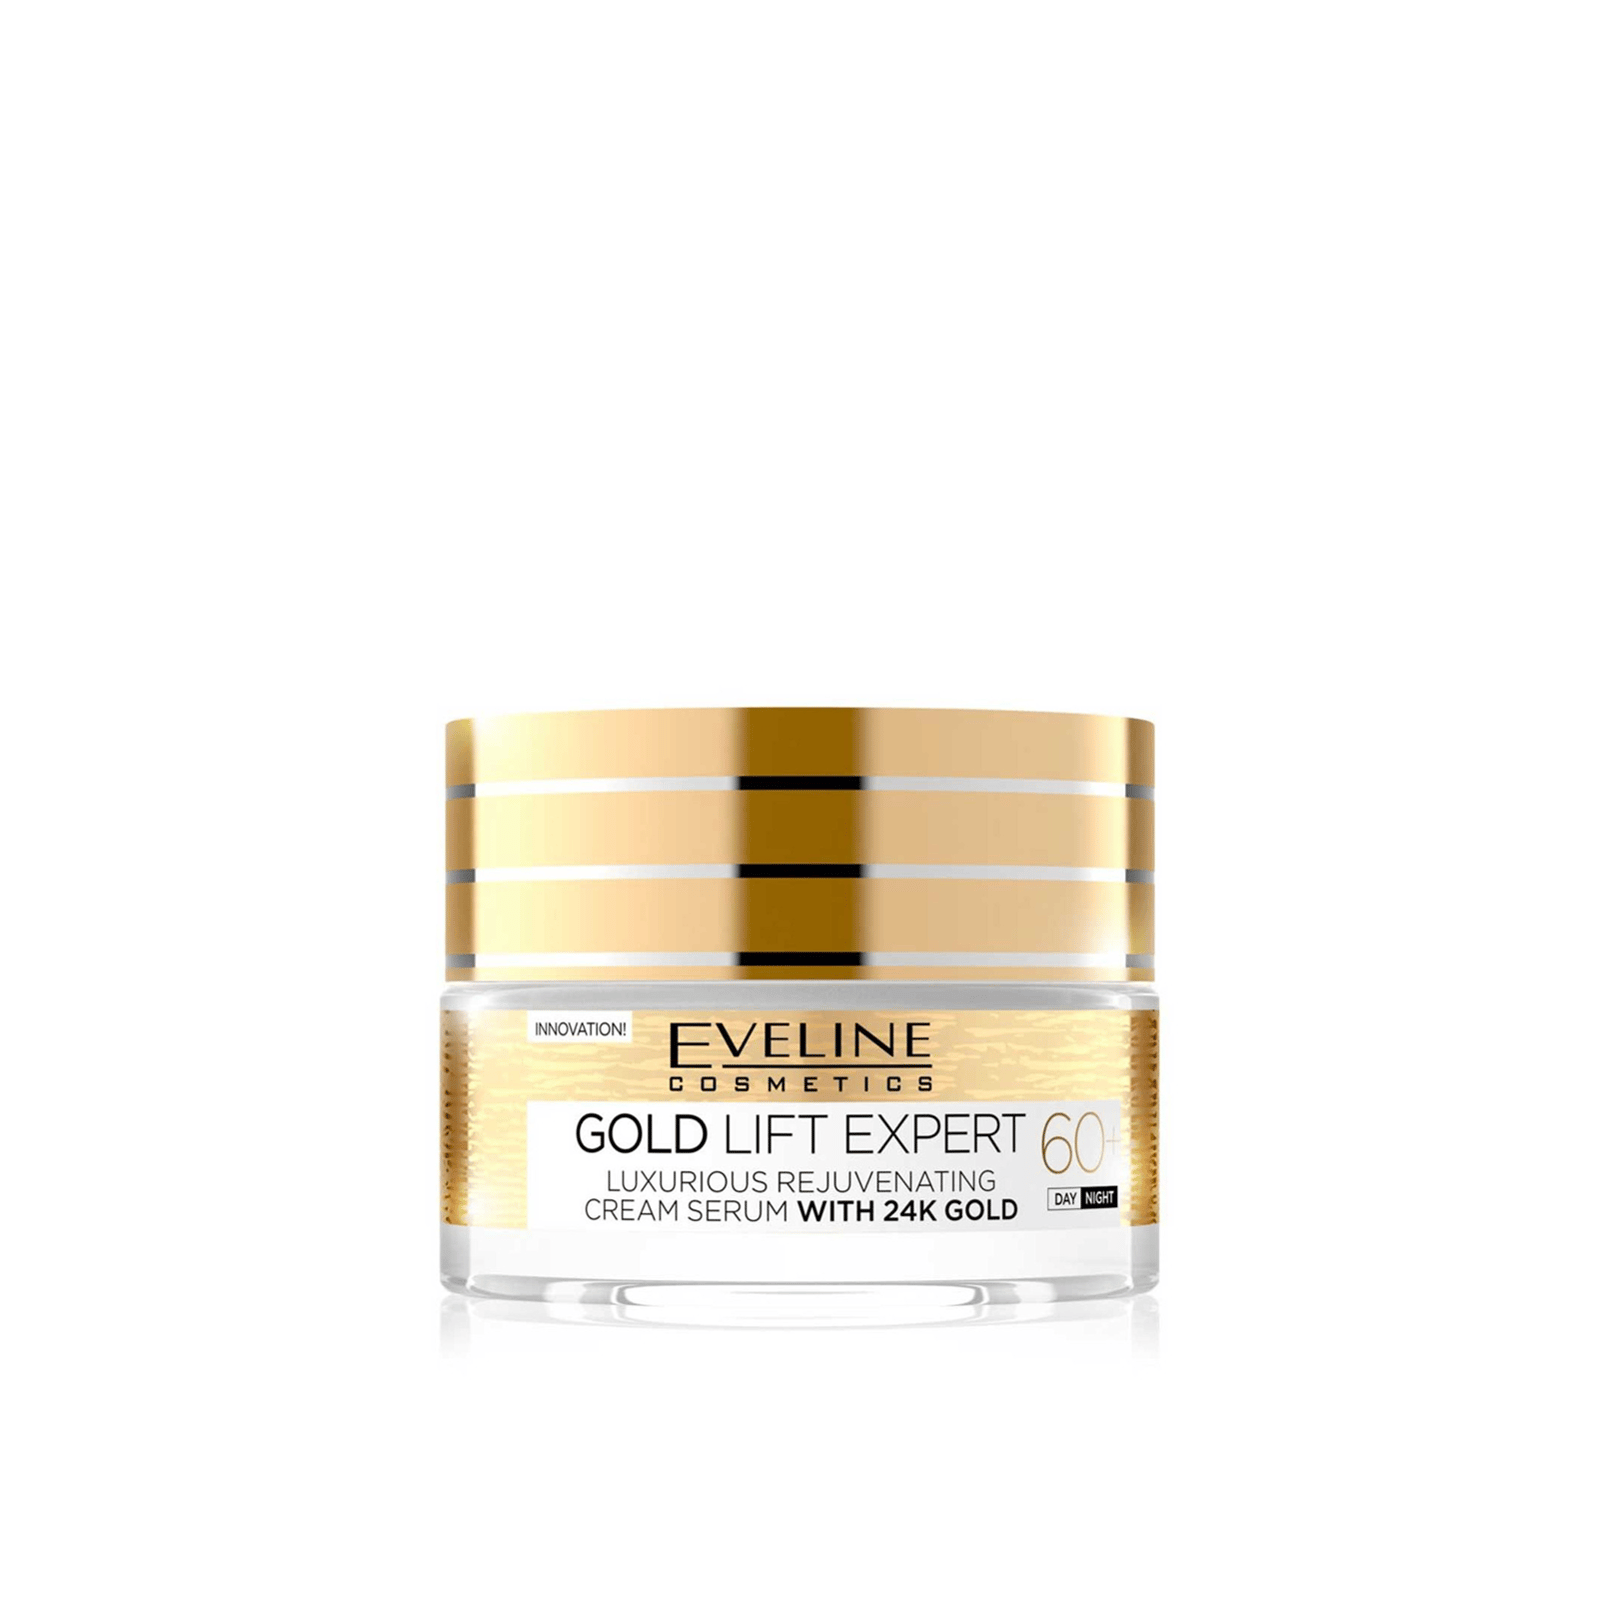 Eveline Cosmetics Gold Lift Expert 60+ Luxurious Rejuvenating Cream Serum 50ml (1.76 fl oz)